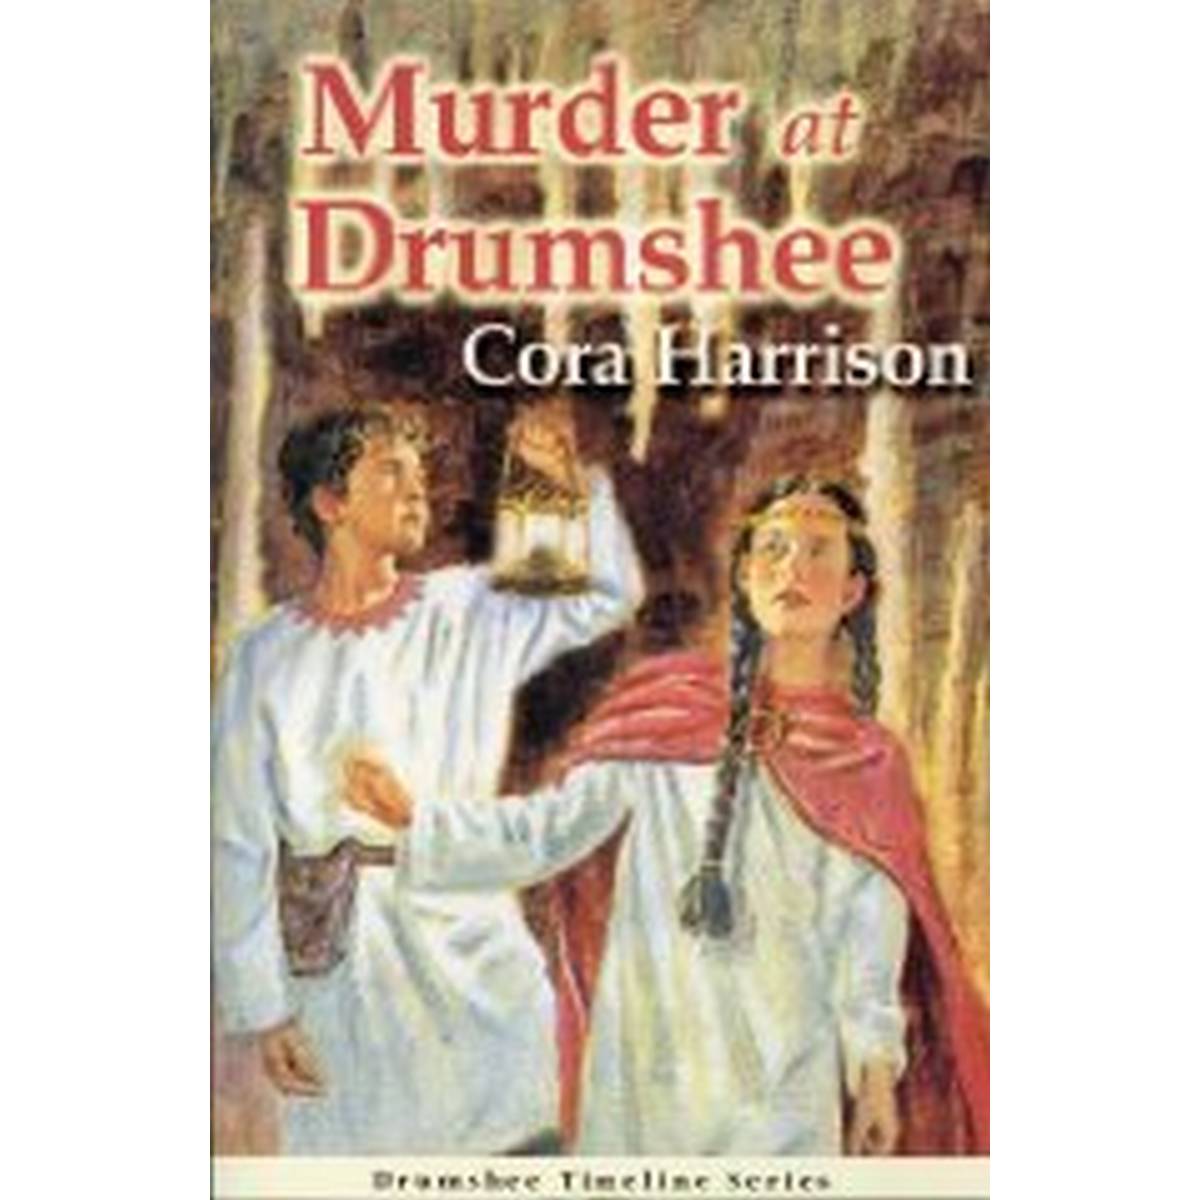 Murder at Drumshee